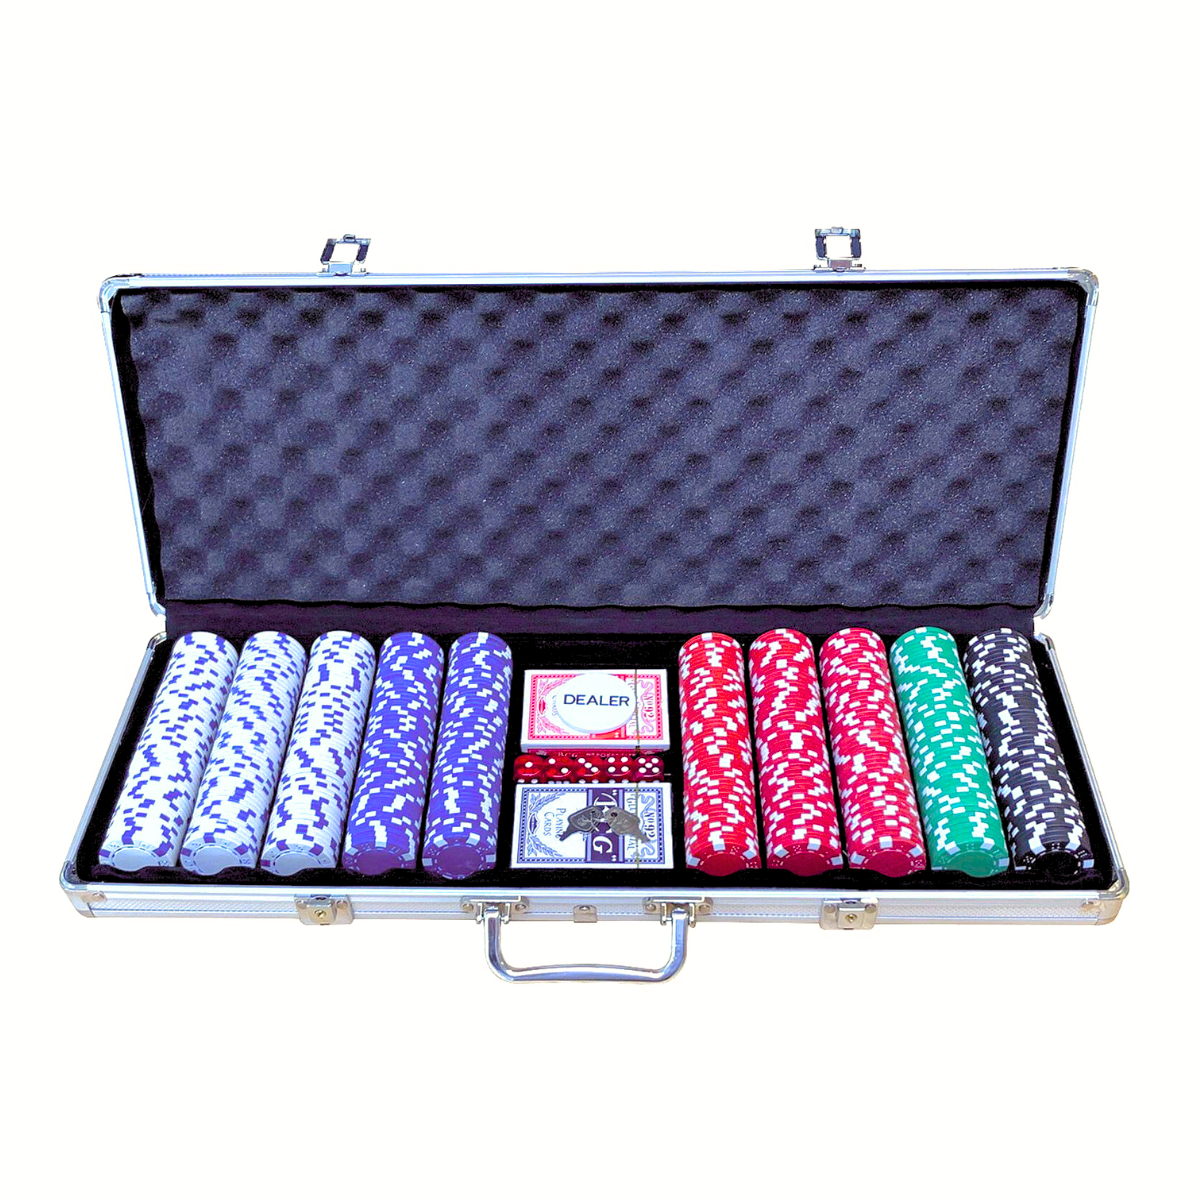 The All In Aluminium Case Poker Set